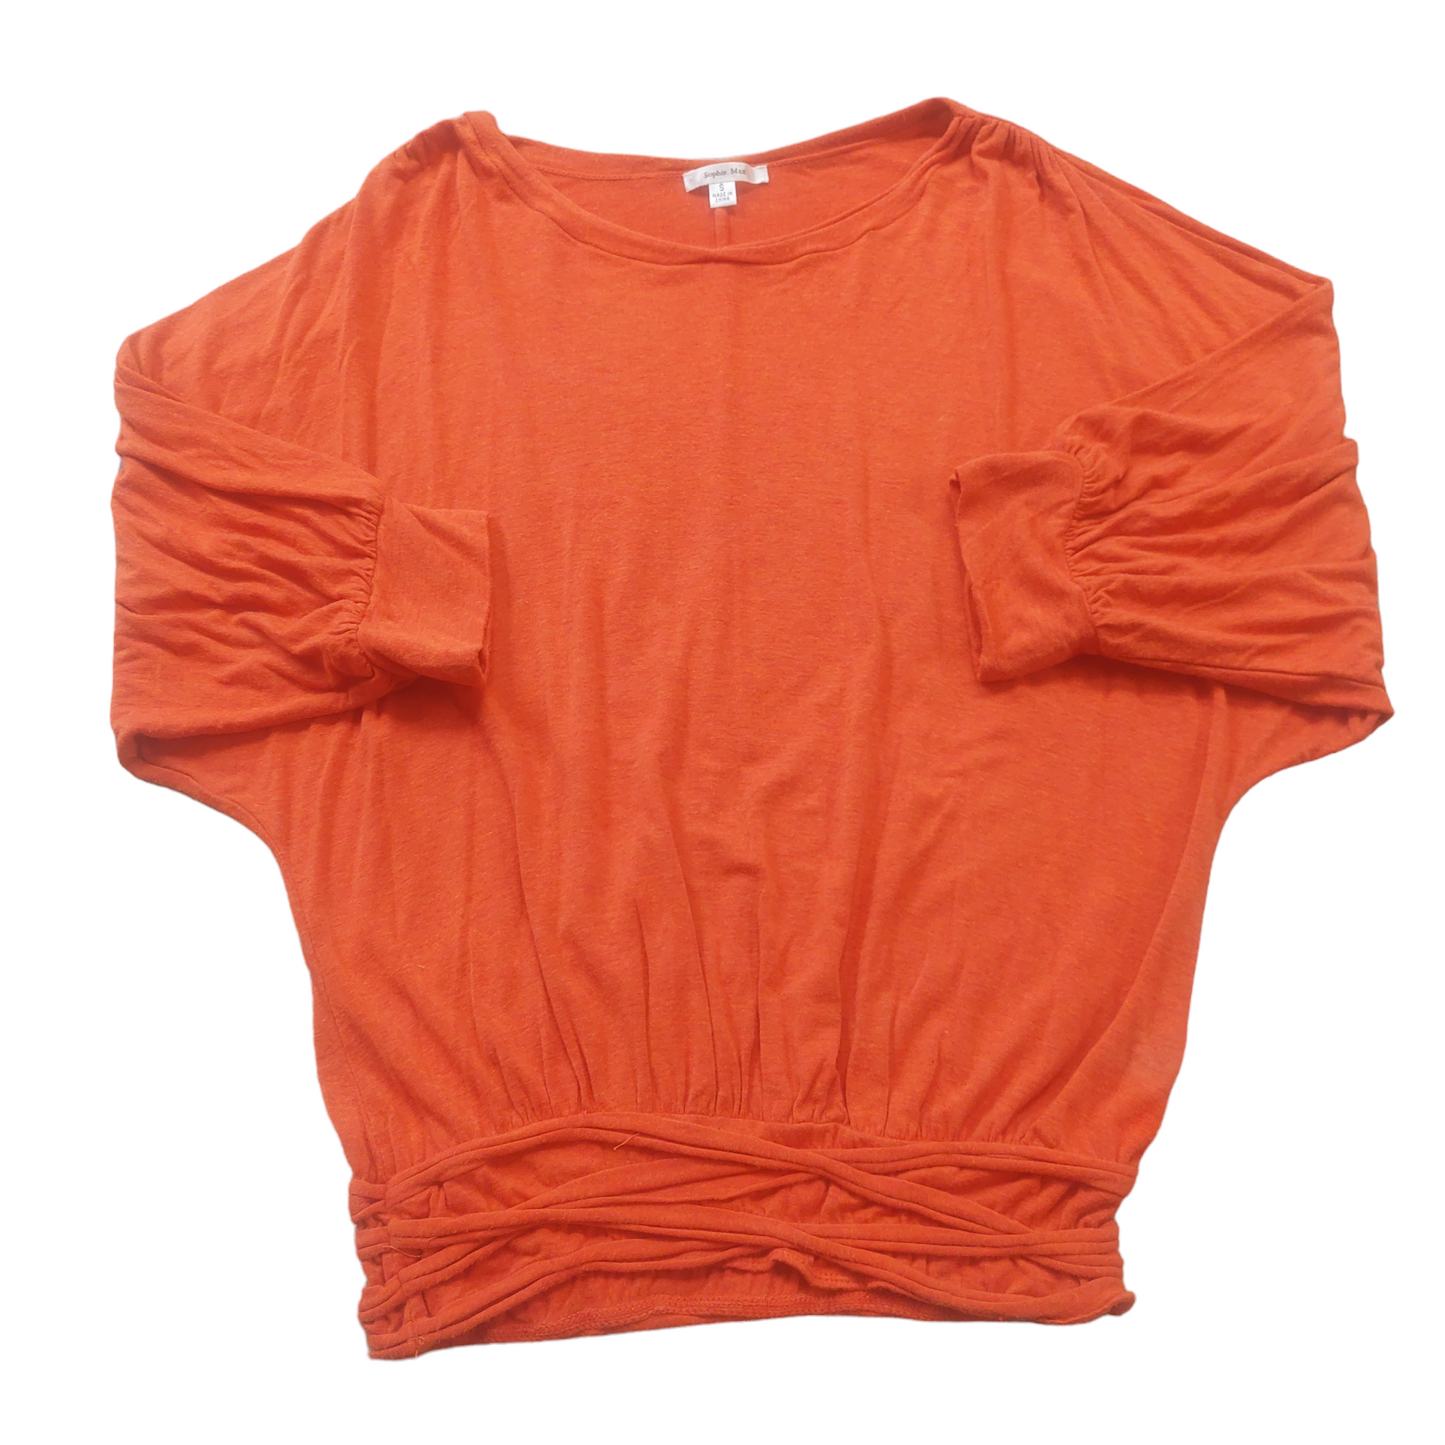 Orange Top 3/4 Sleeve Sophie Max, Size S